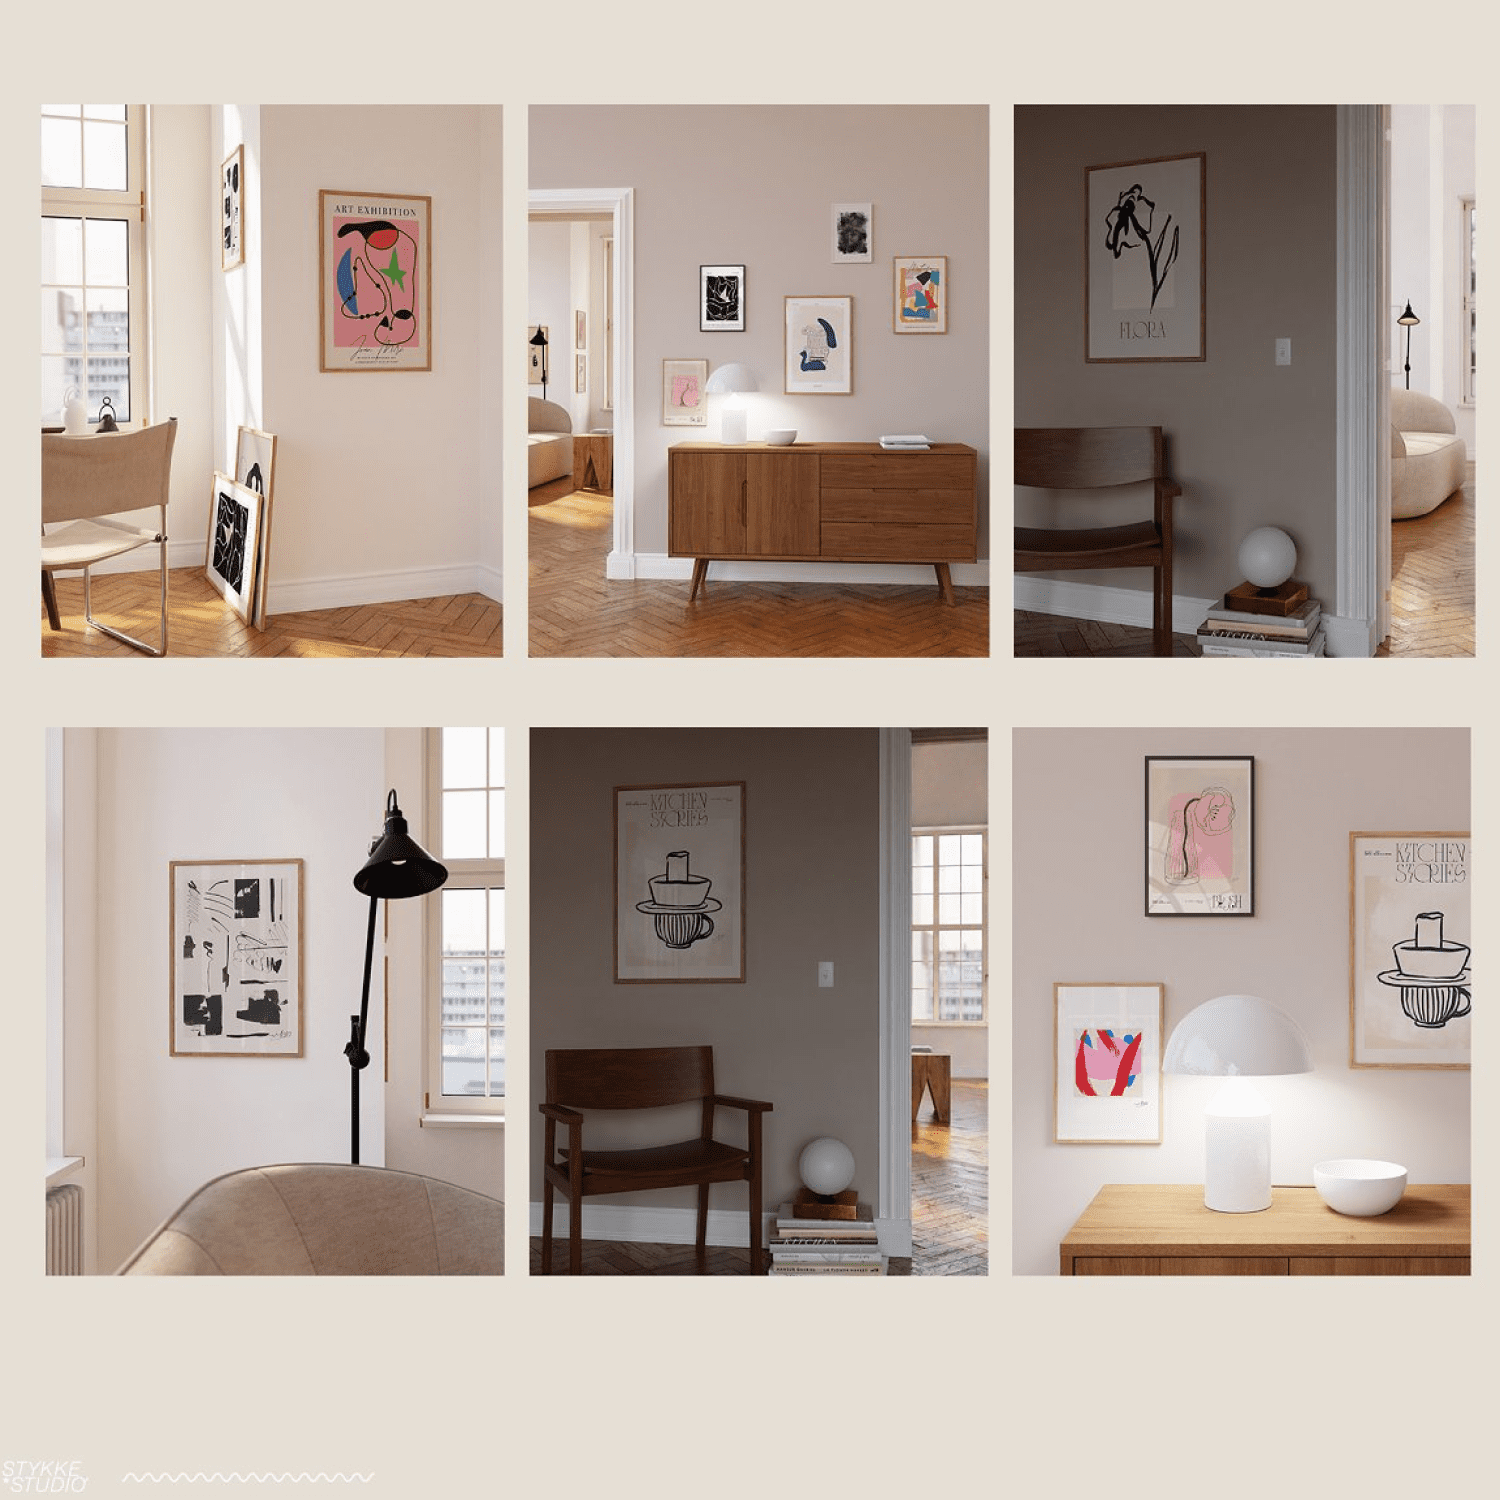 LISAS ROOM Interior & Frame Mockup created by Stykke Studio.